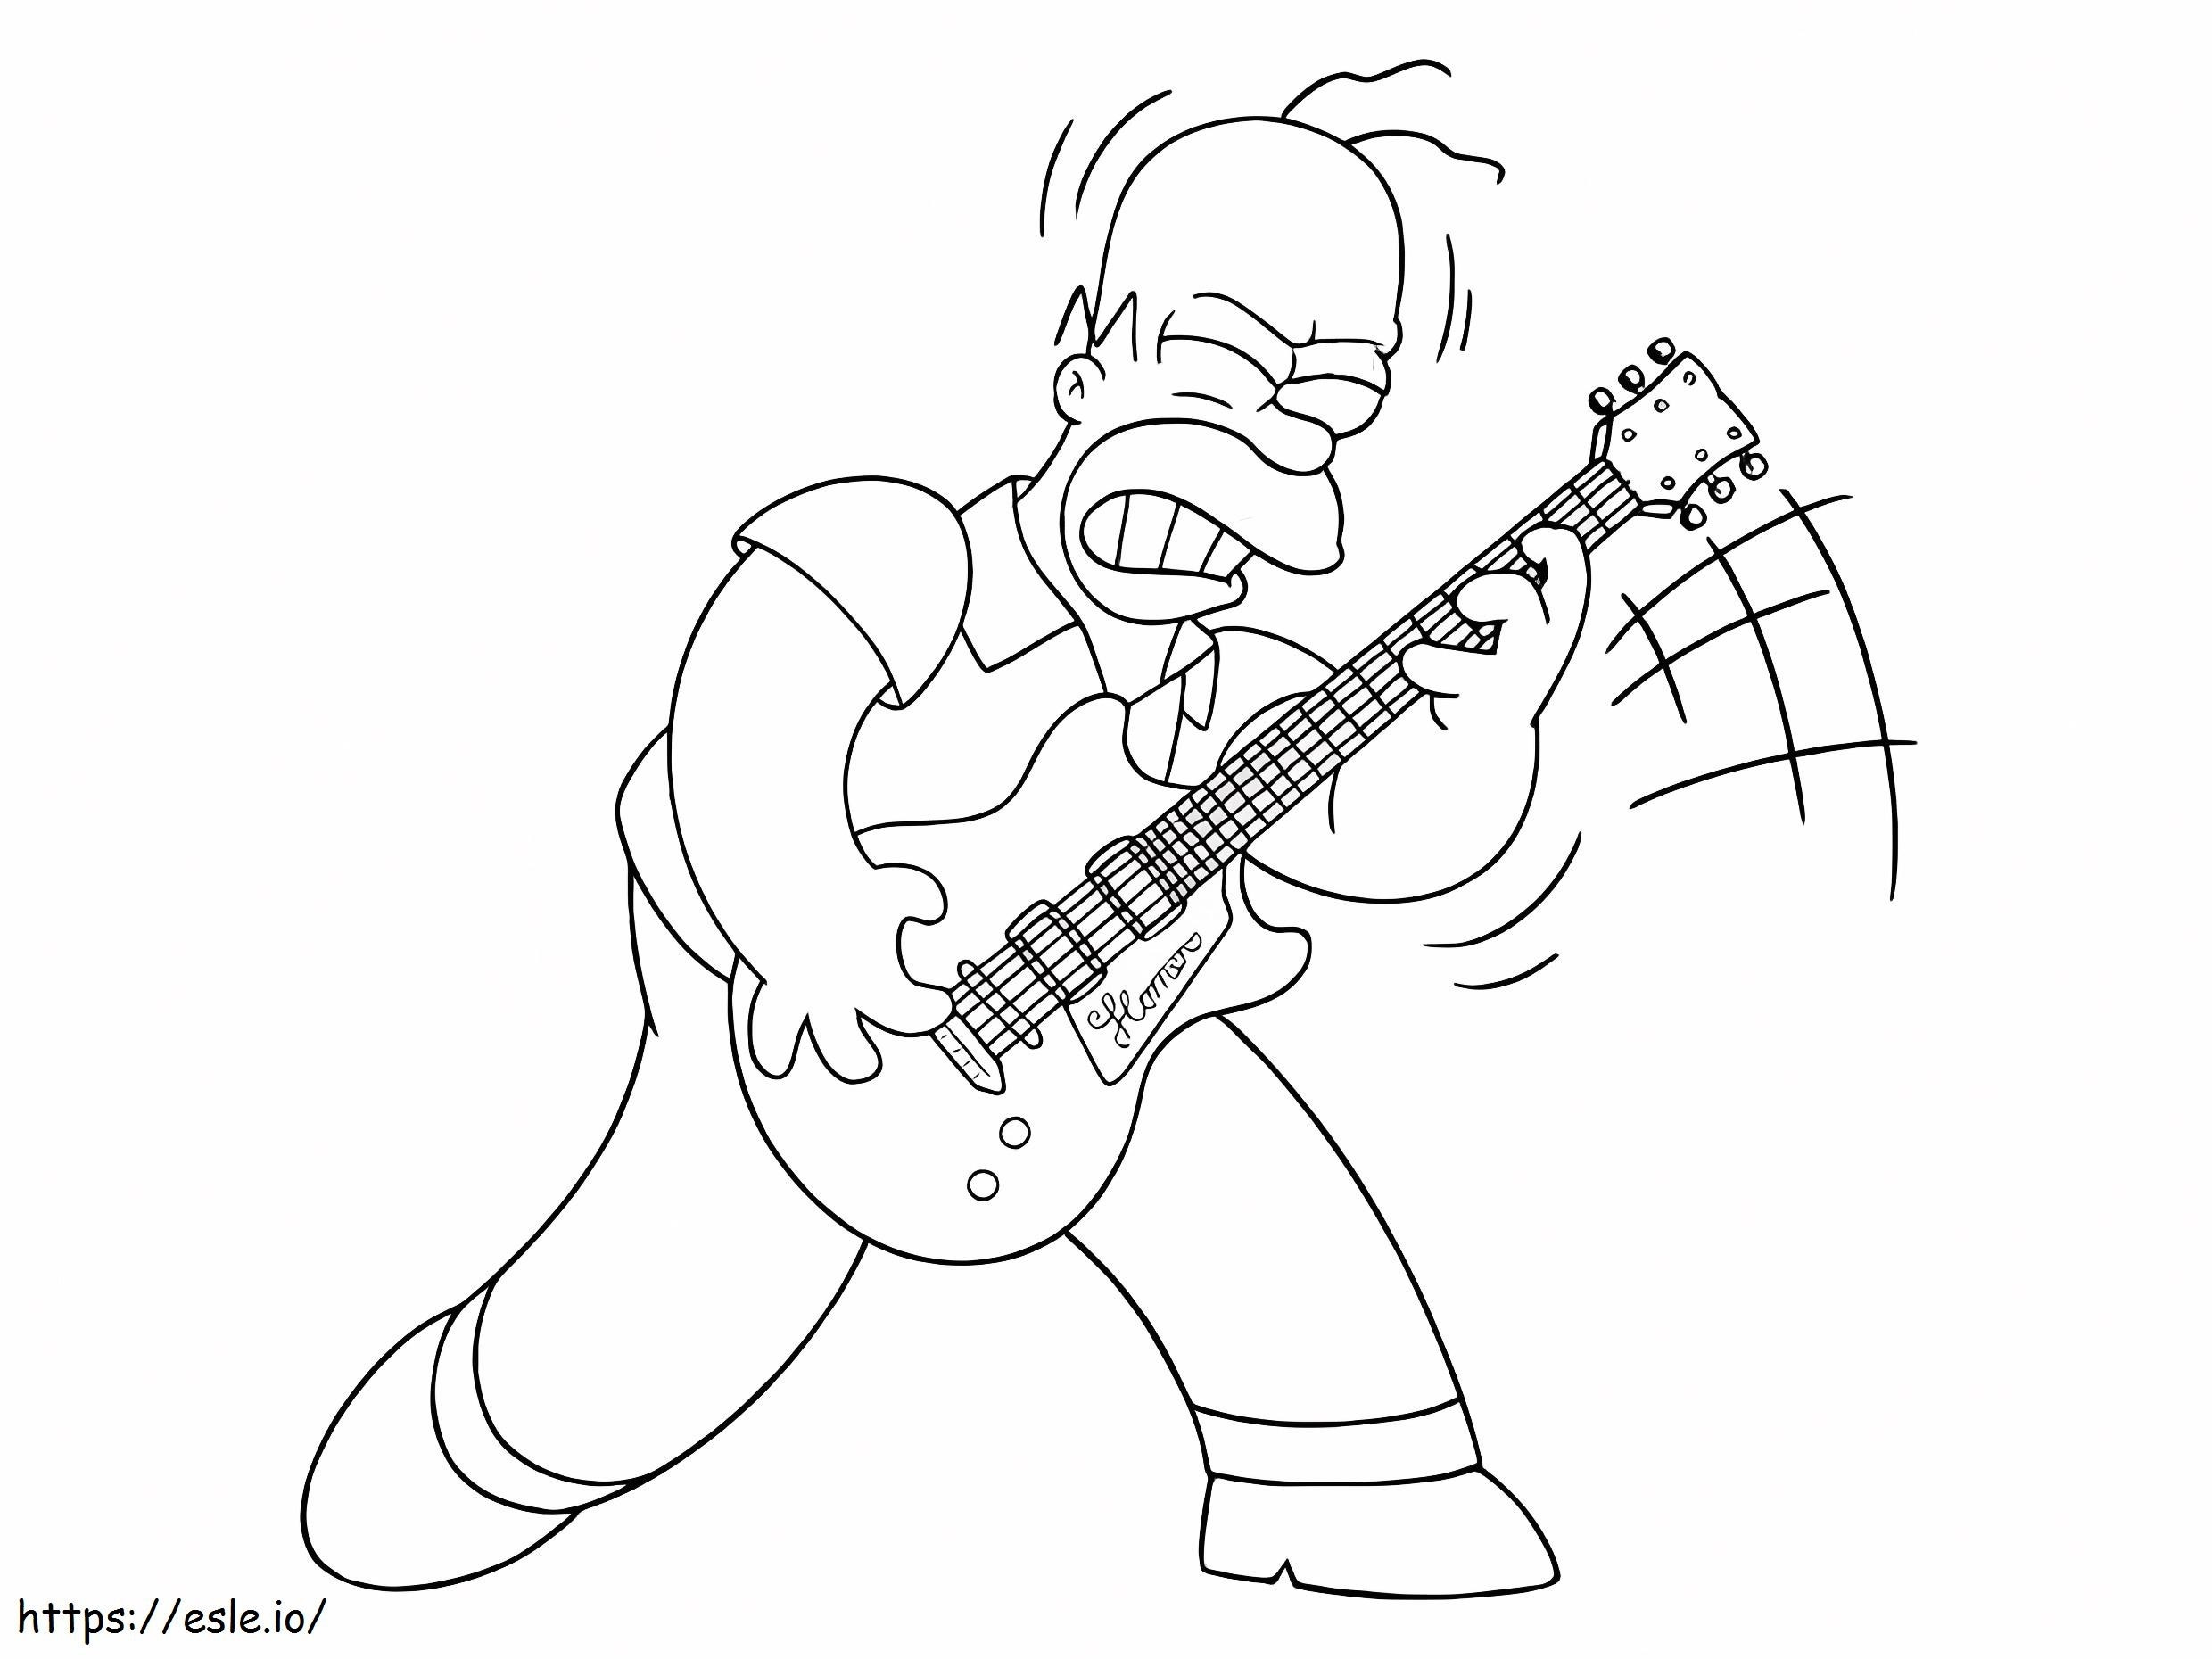 Hommer tocando guitarra 2 para colorir